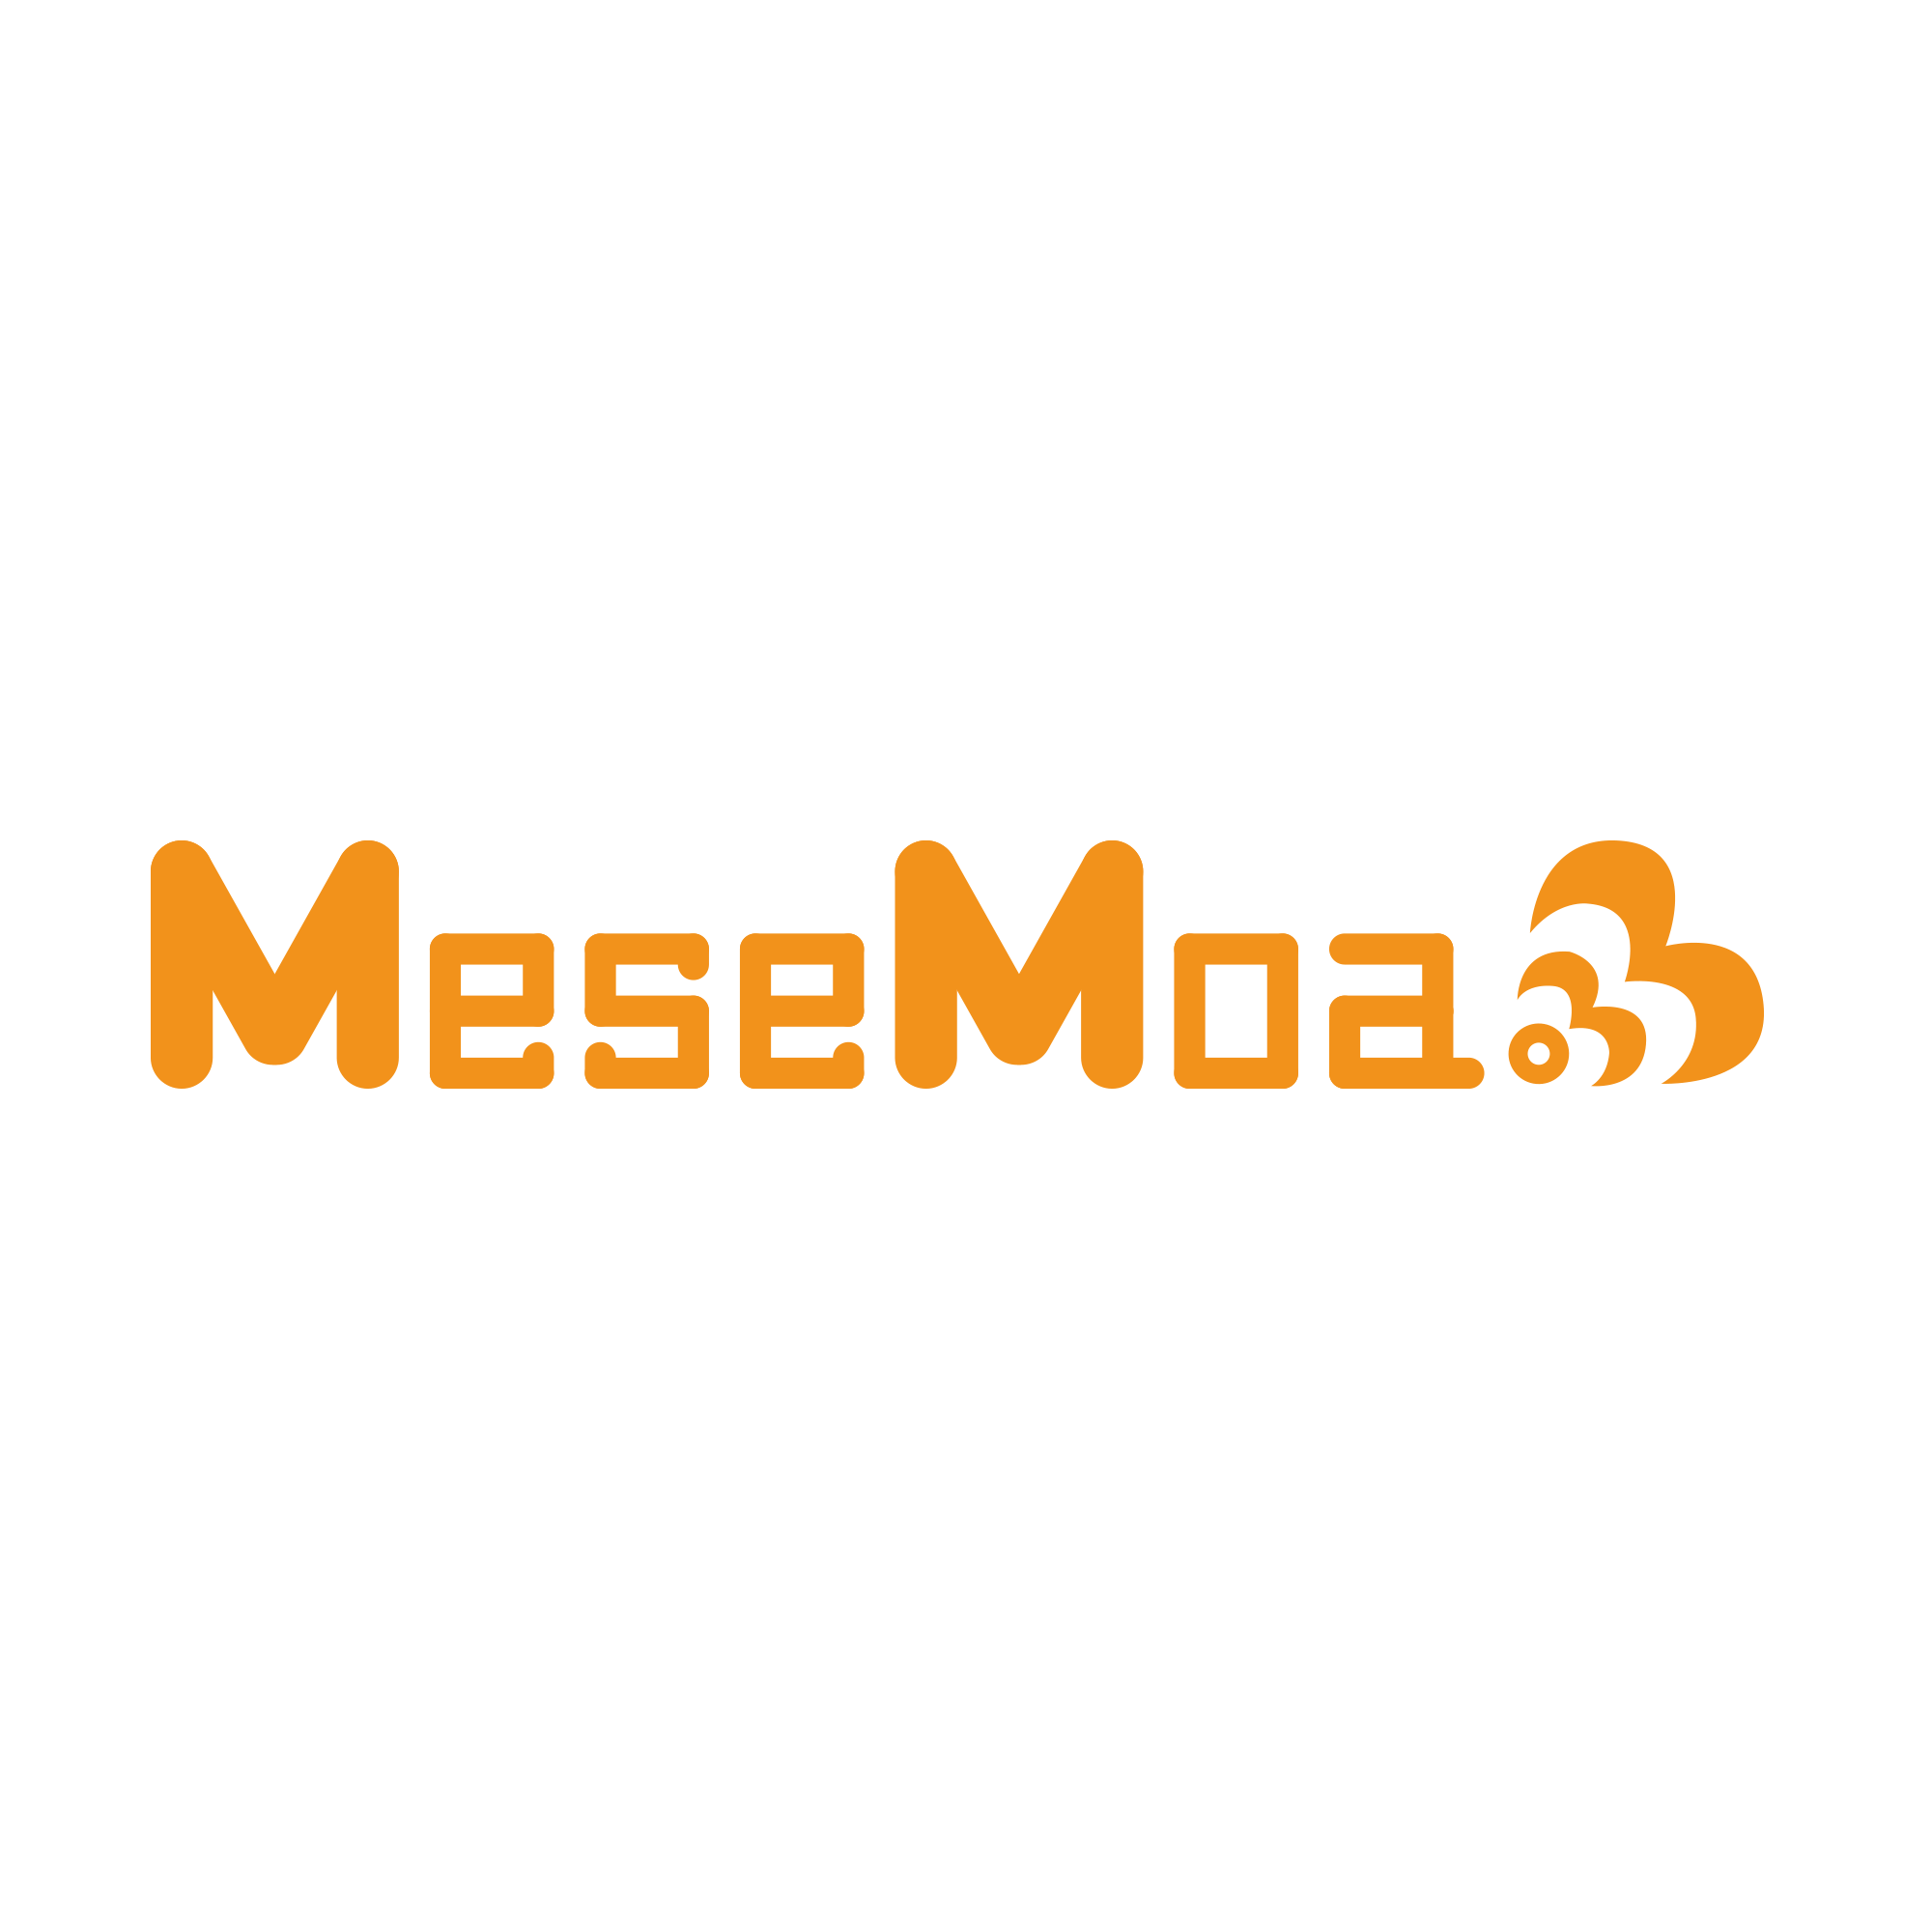 MeseMoa.聖誕祭】2022年 MeseMoa.聖誕祭日程のお知らせ | MeseMoa.